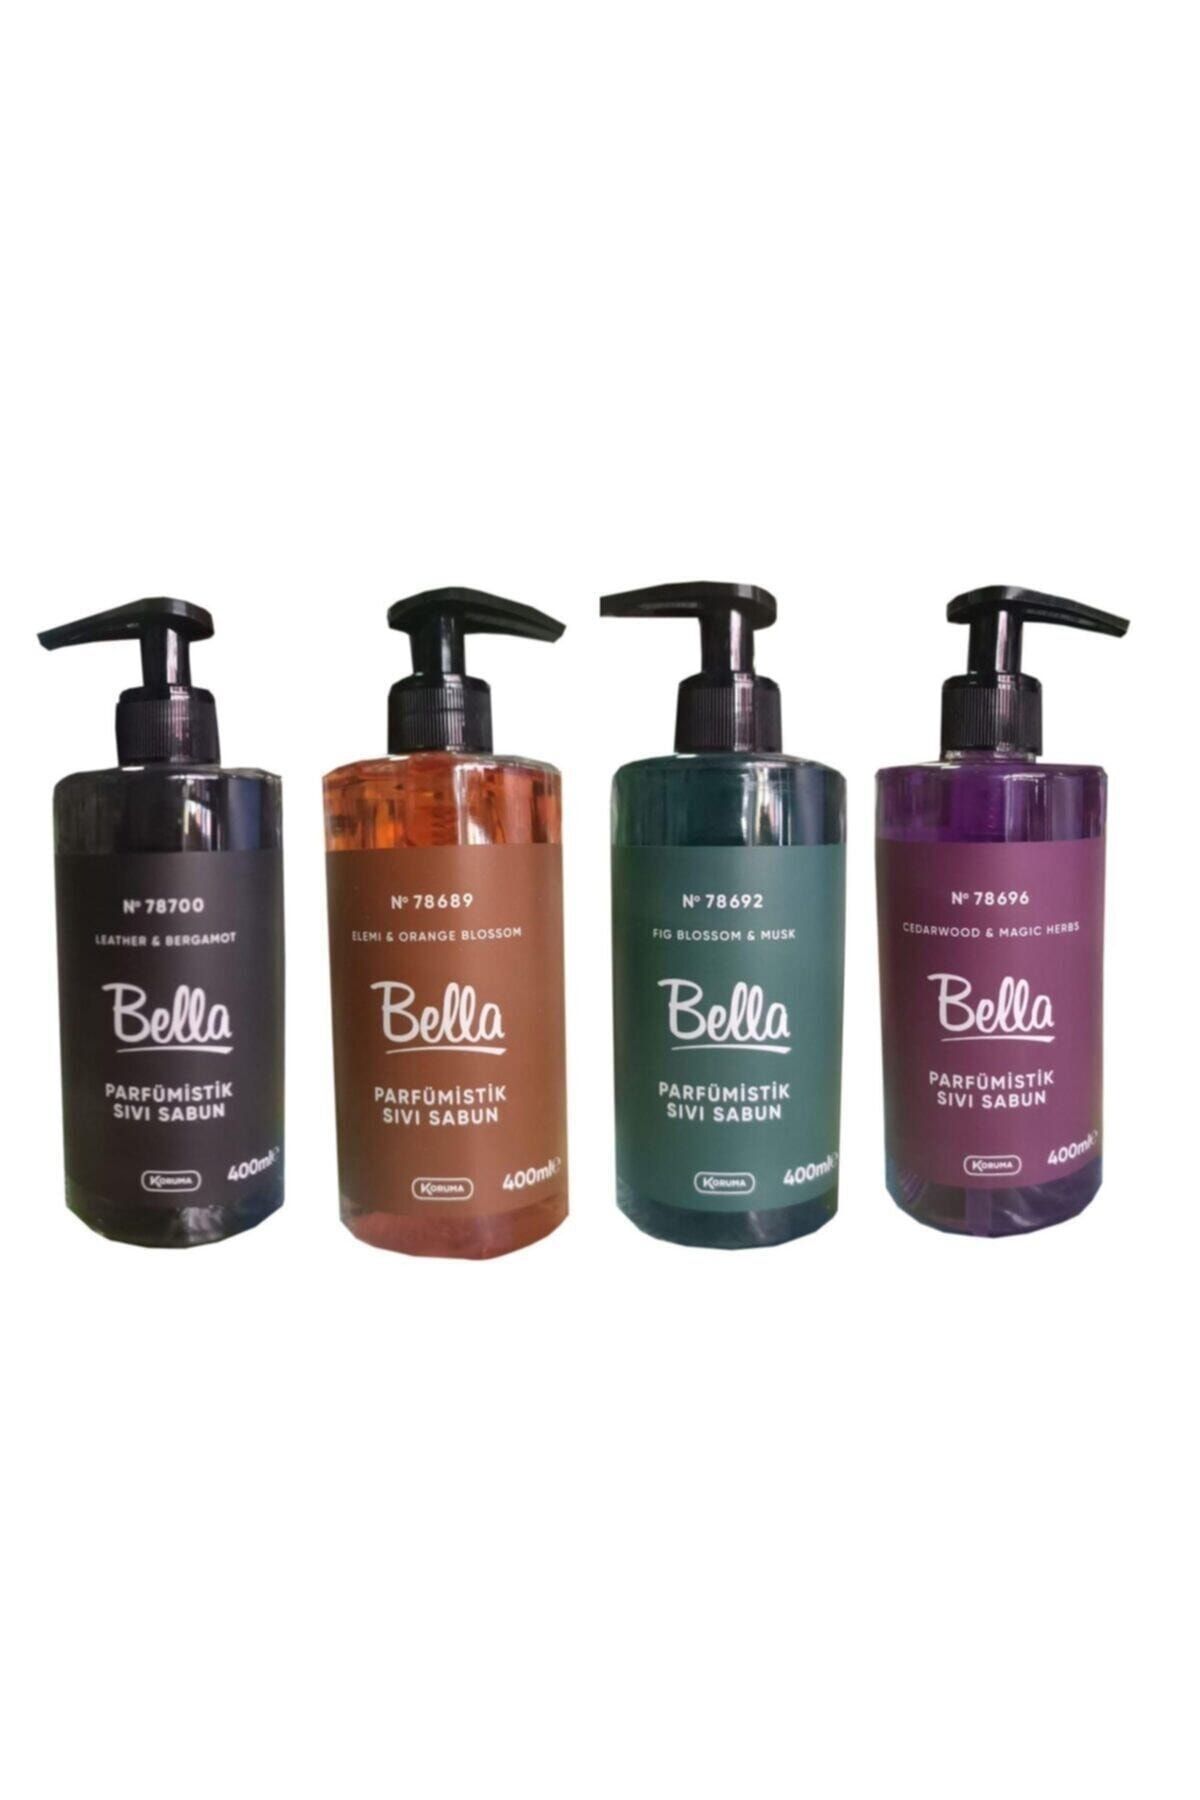 Bella Parfümistik Sıvı Sabun 400 ml Seti Leather&bergamot/cedarwood &magic Herbs/fig Blossom & Musk/